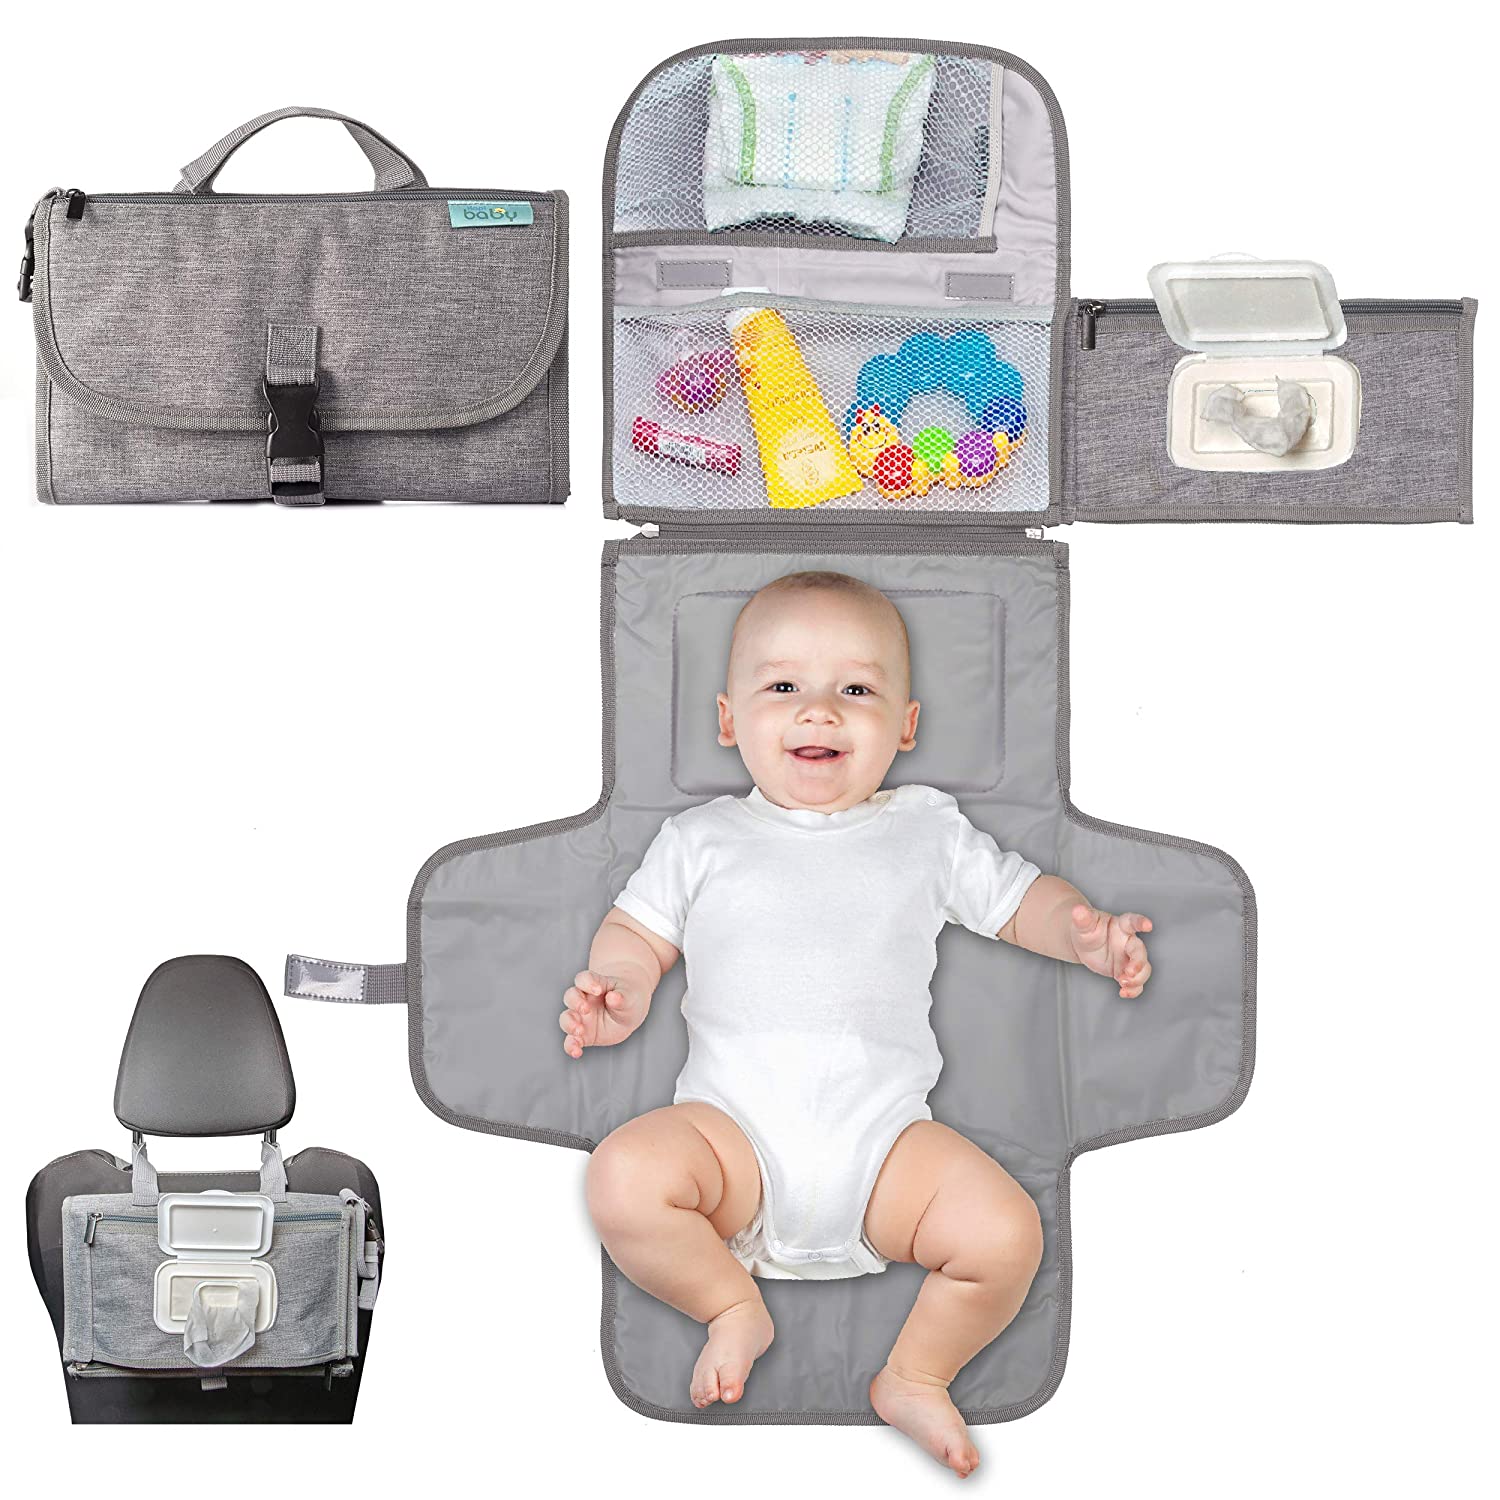 Kopi Baby portable diaper changing pad